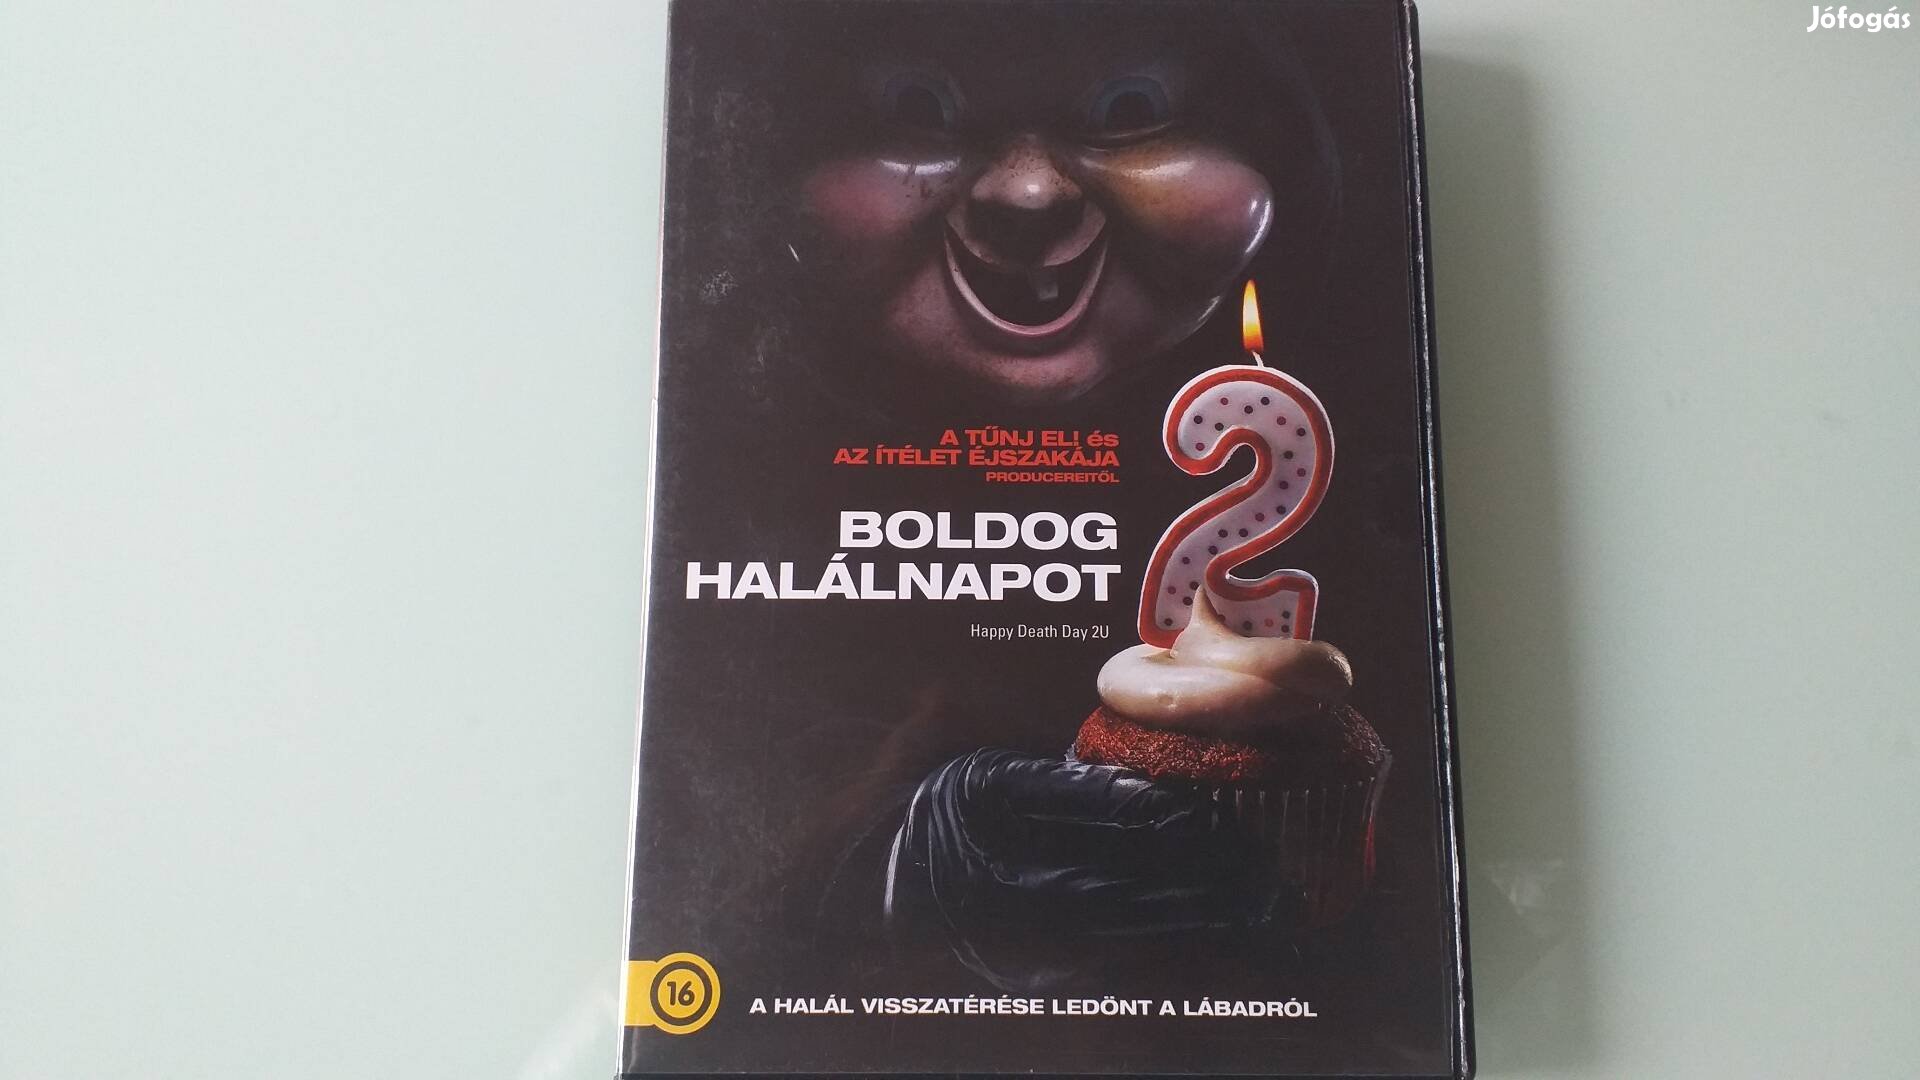 Boldog halálnapot 2 horror DVD film